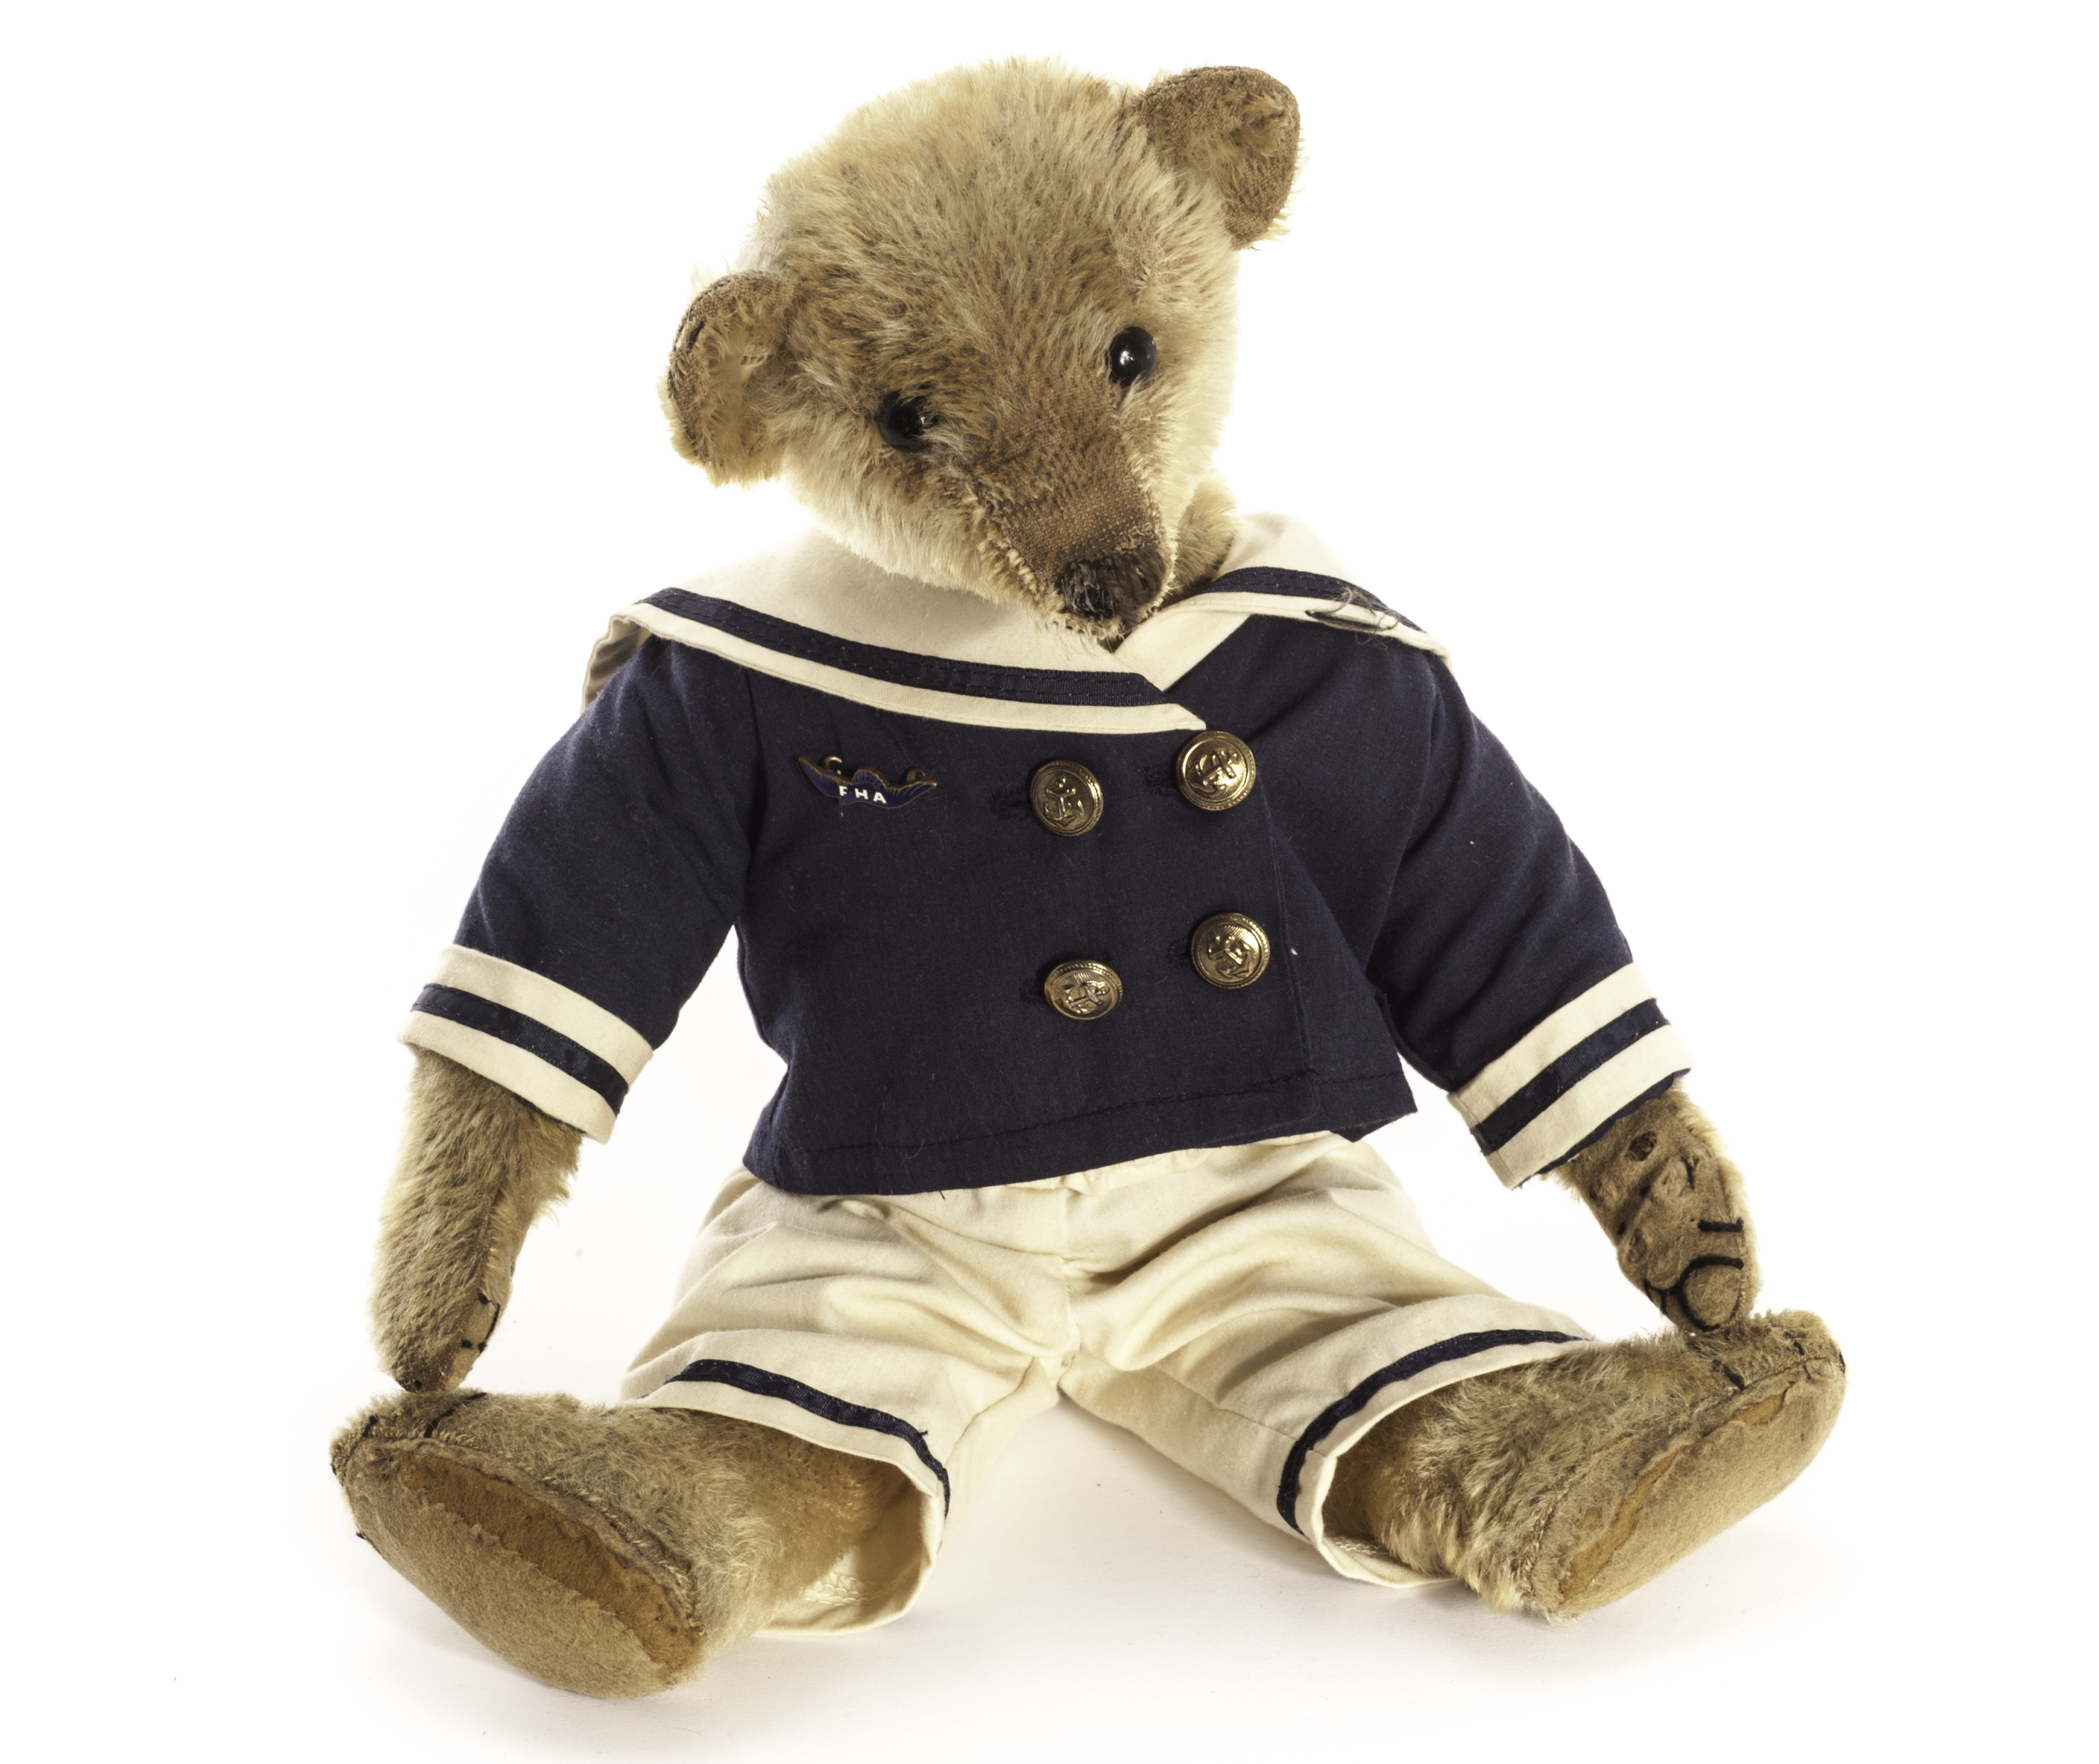 A J.K. Farnell Teddy Bear, circa 1912, with blonde mohair, black boot button eyes, pronounced